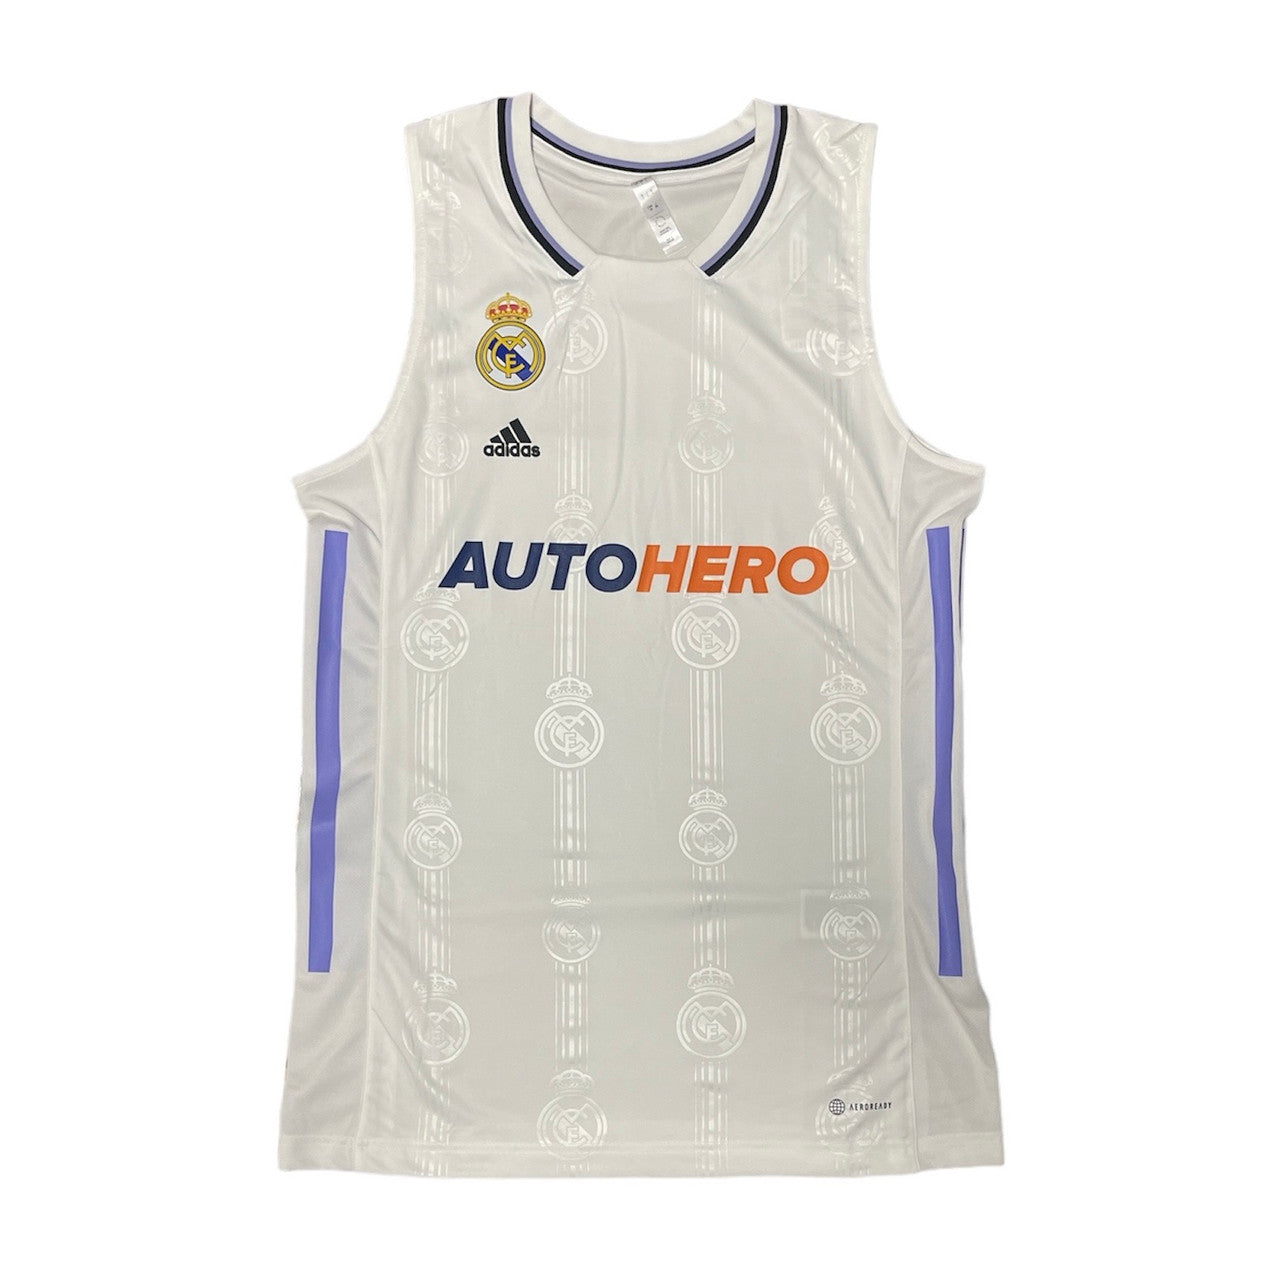 Adidas Real Madrid Basketball Jersey